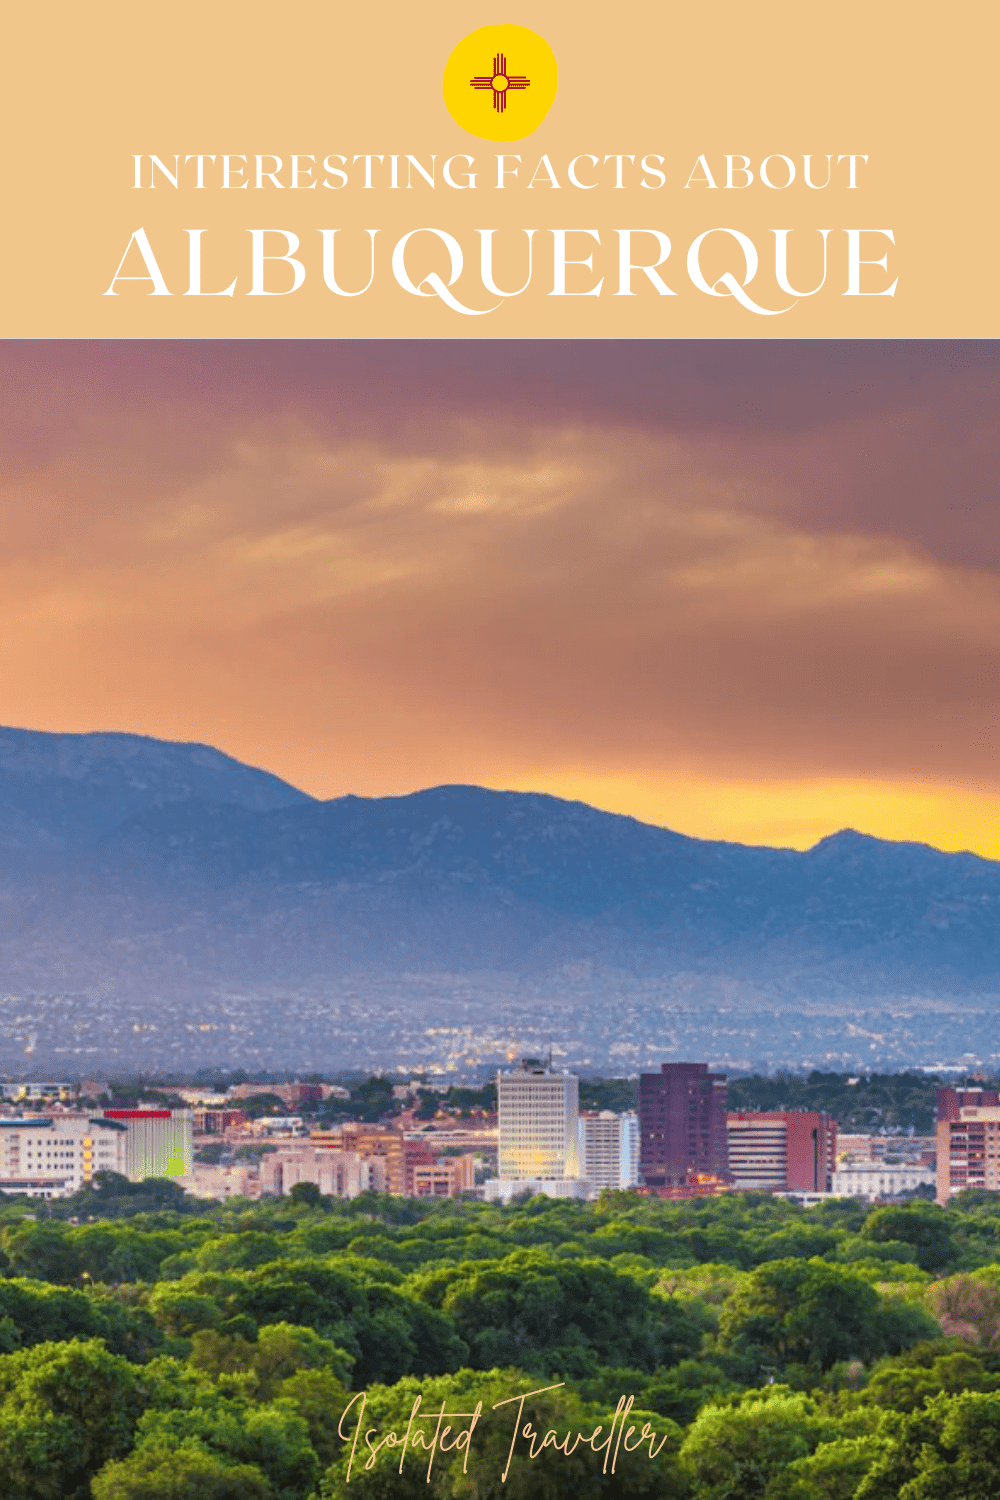 Facts About Albuquerque